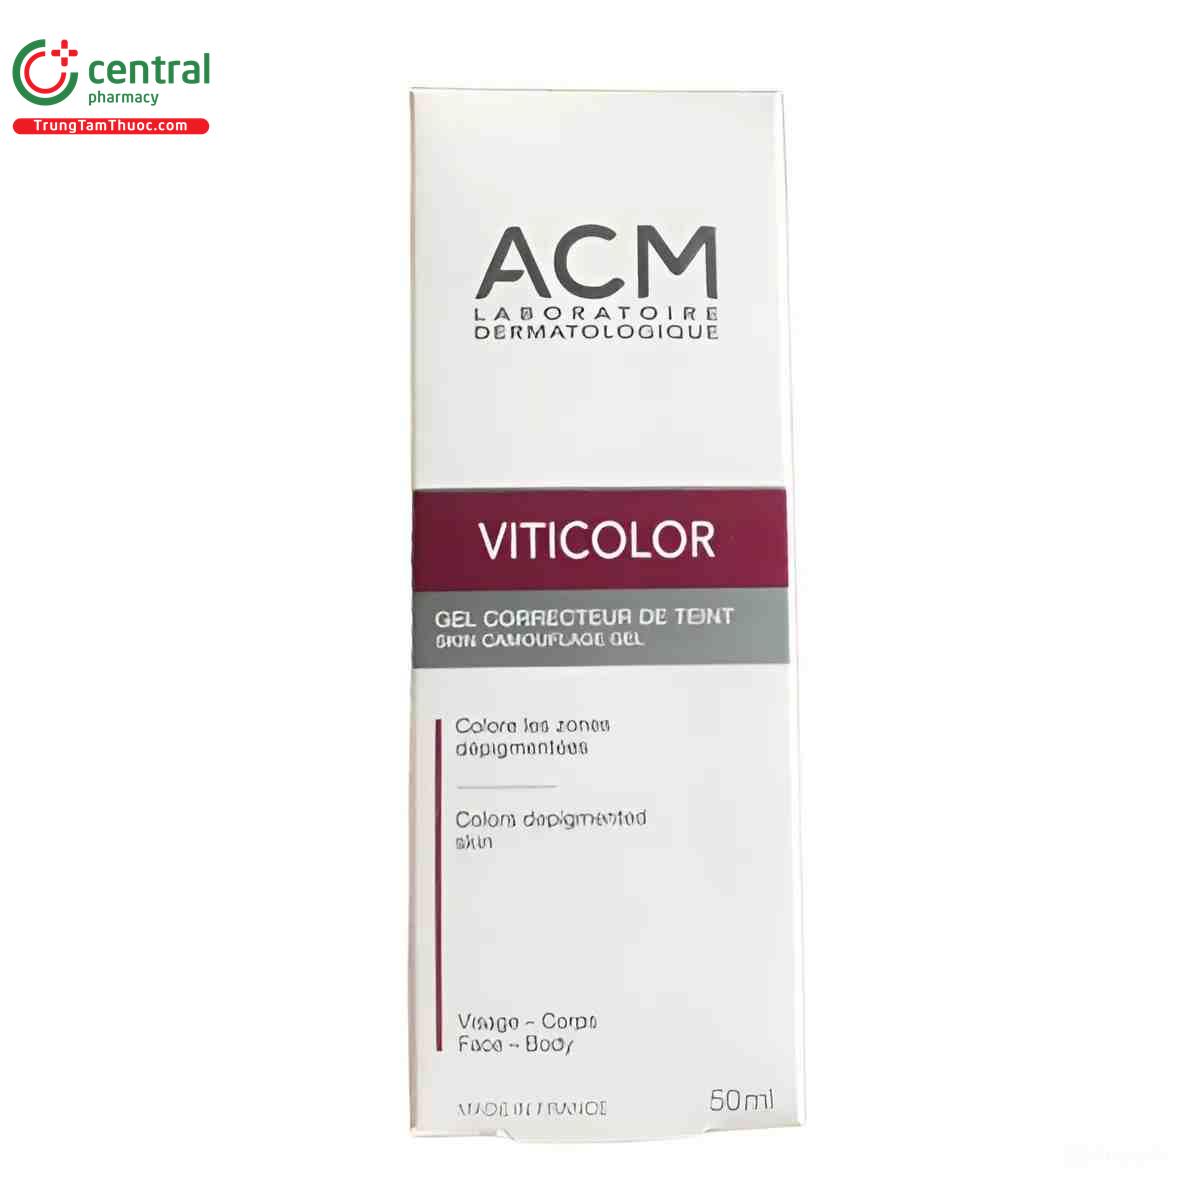 acm viticolor skin camouflage gel 2 F2625